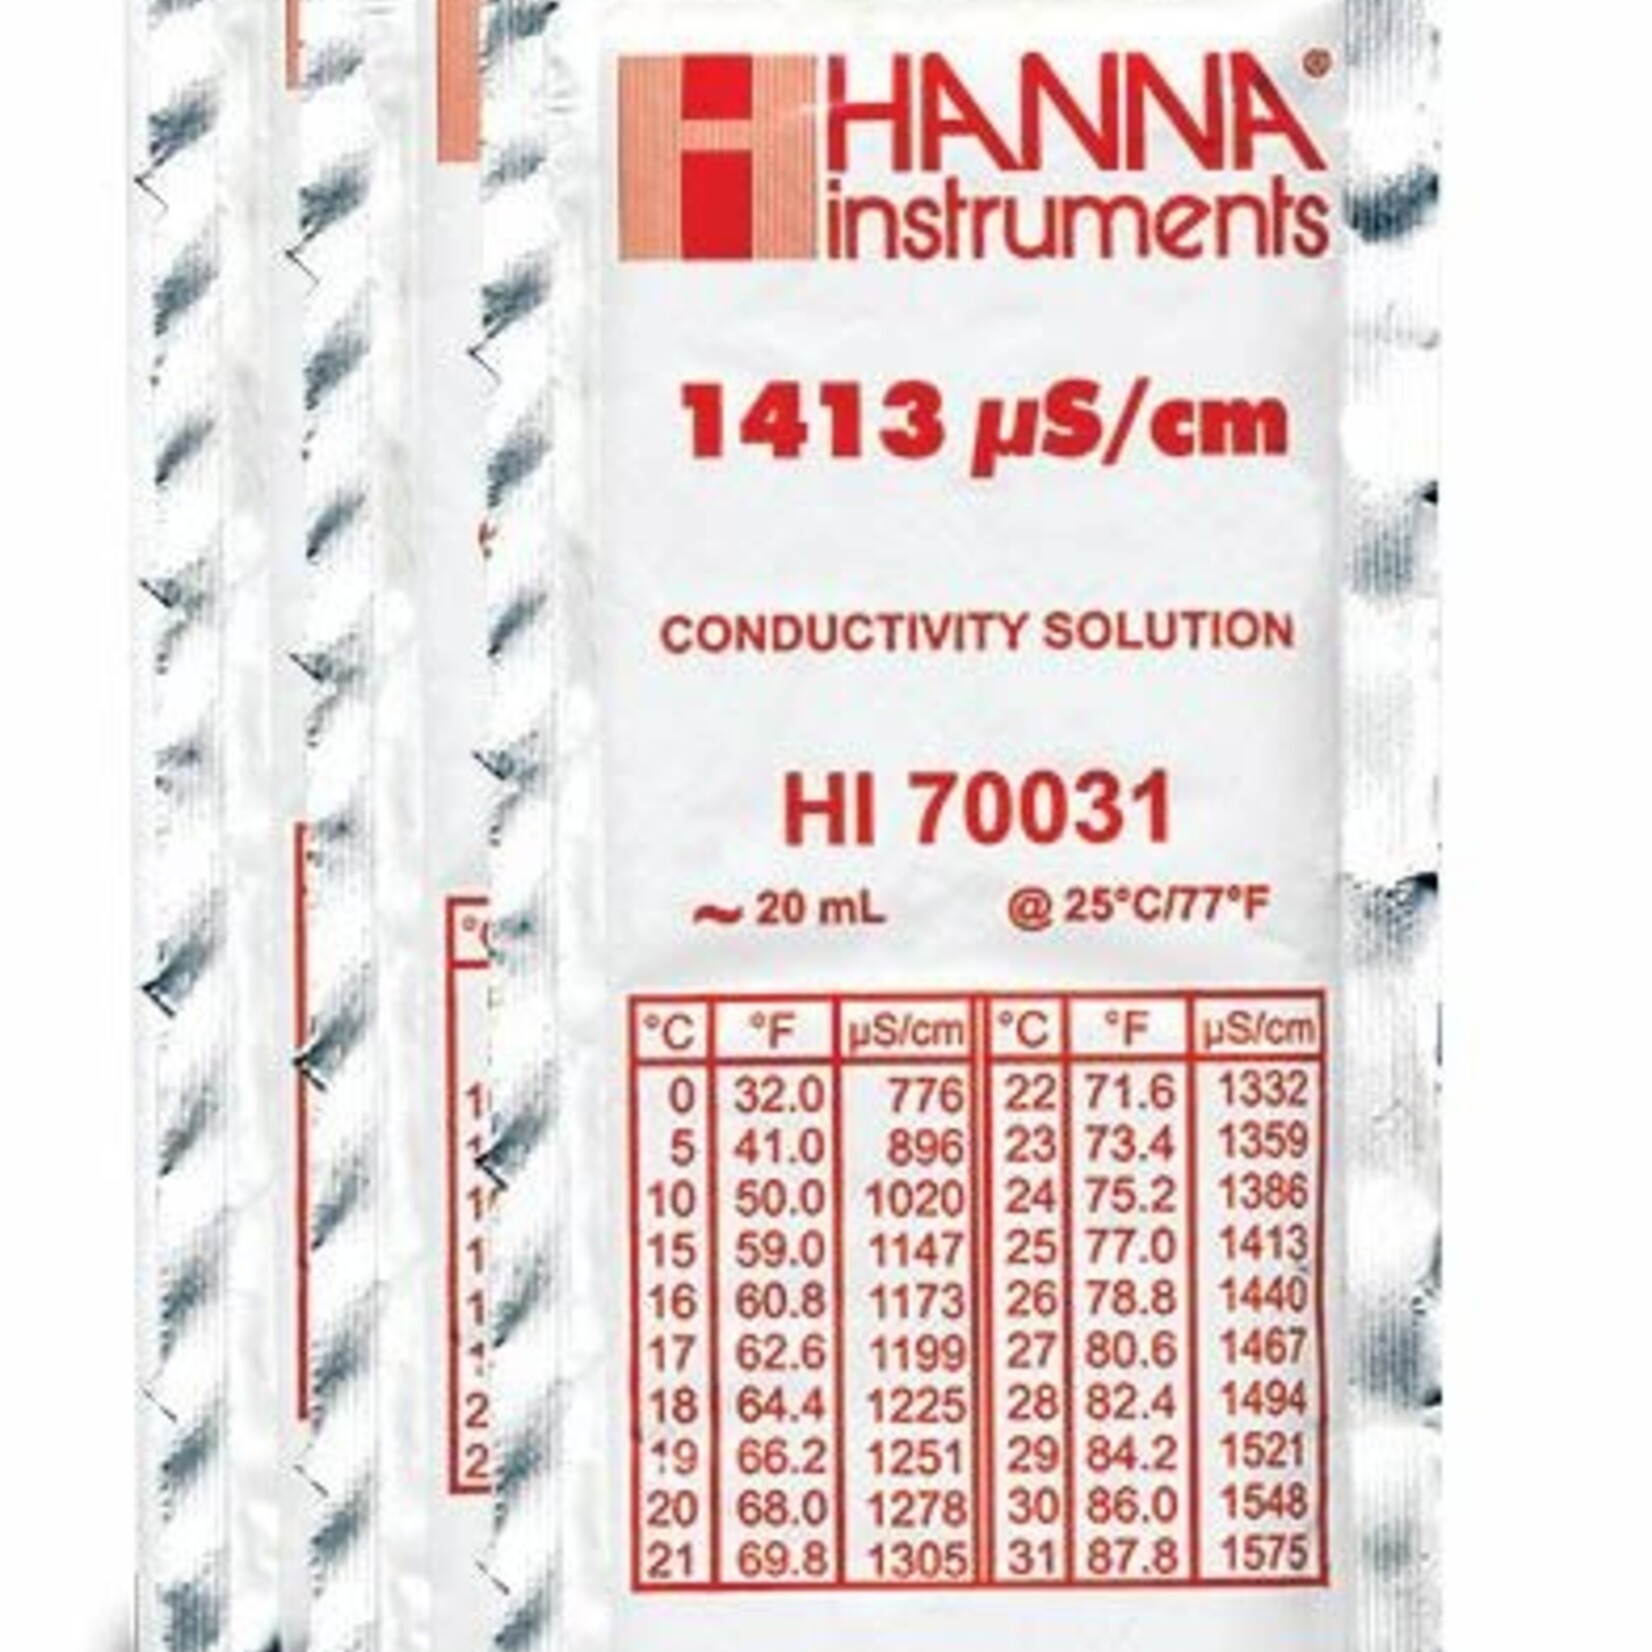 Hanna Instruments 1413 S/cm (EC) Calibration Solution,  20mL